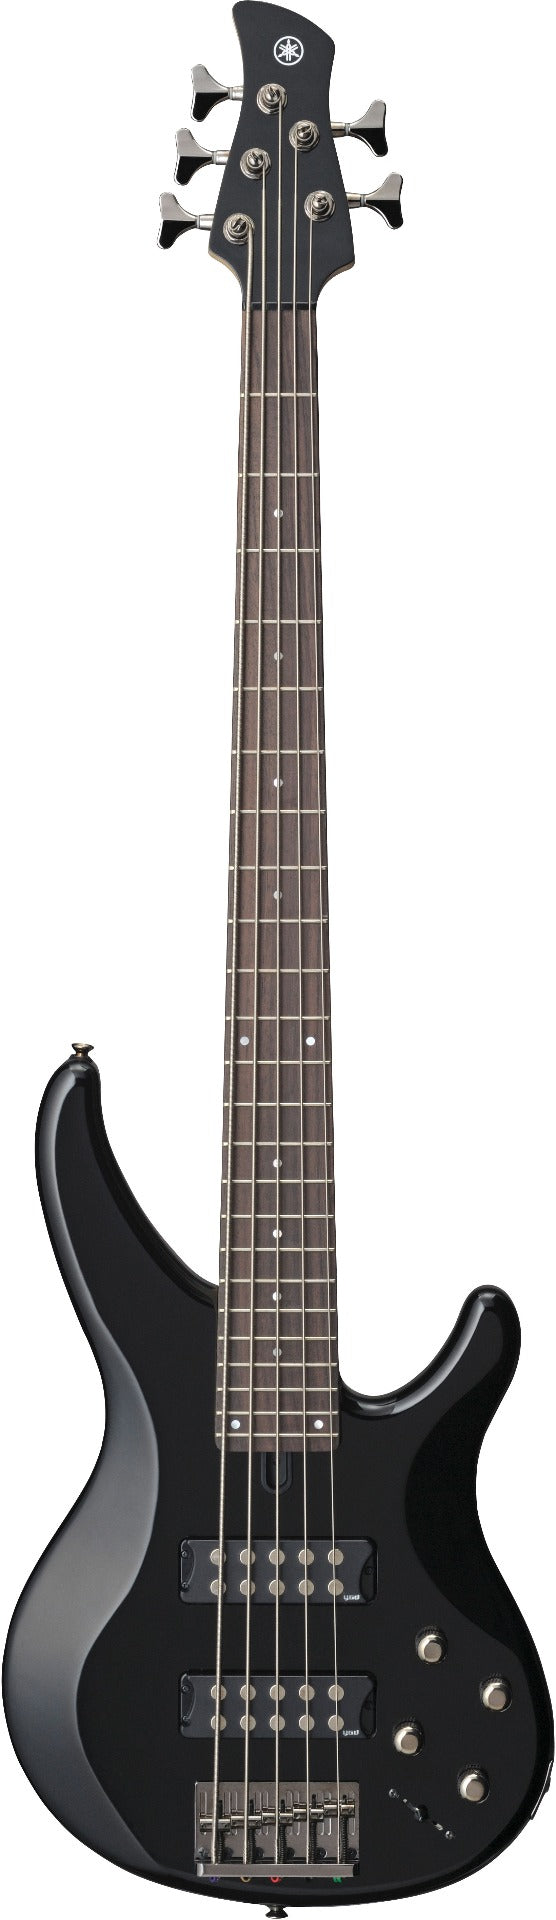 Yamaha TRBX305 BL 5-String Electric Bass Guitar - Black